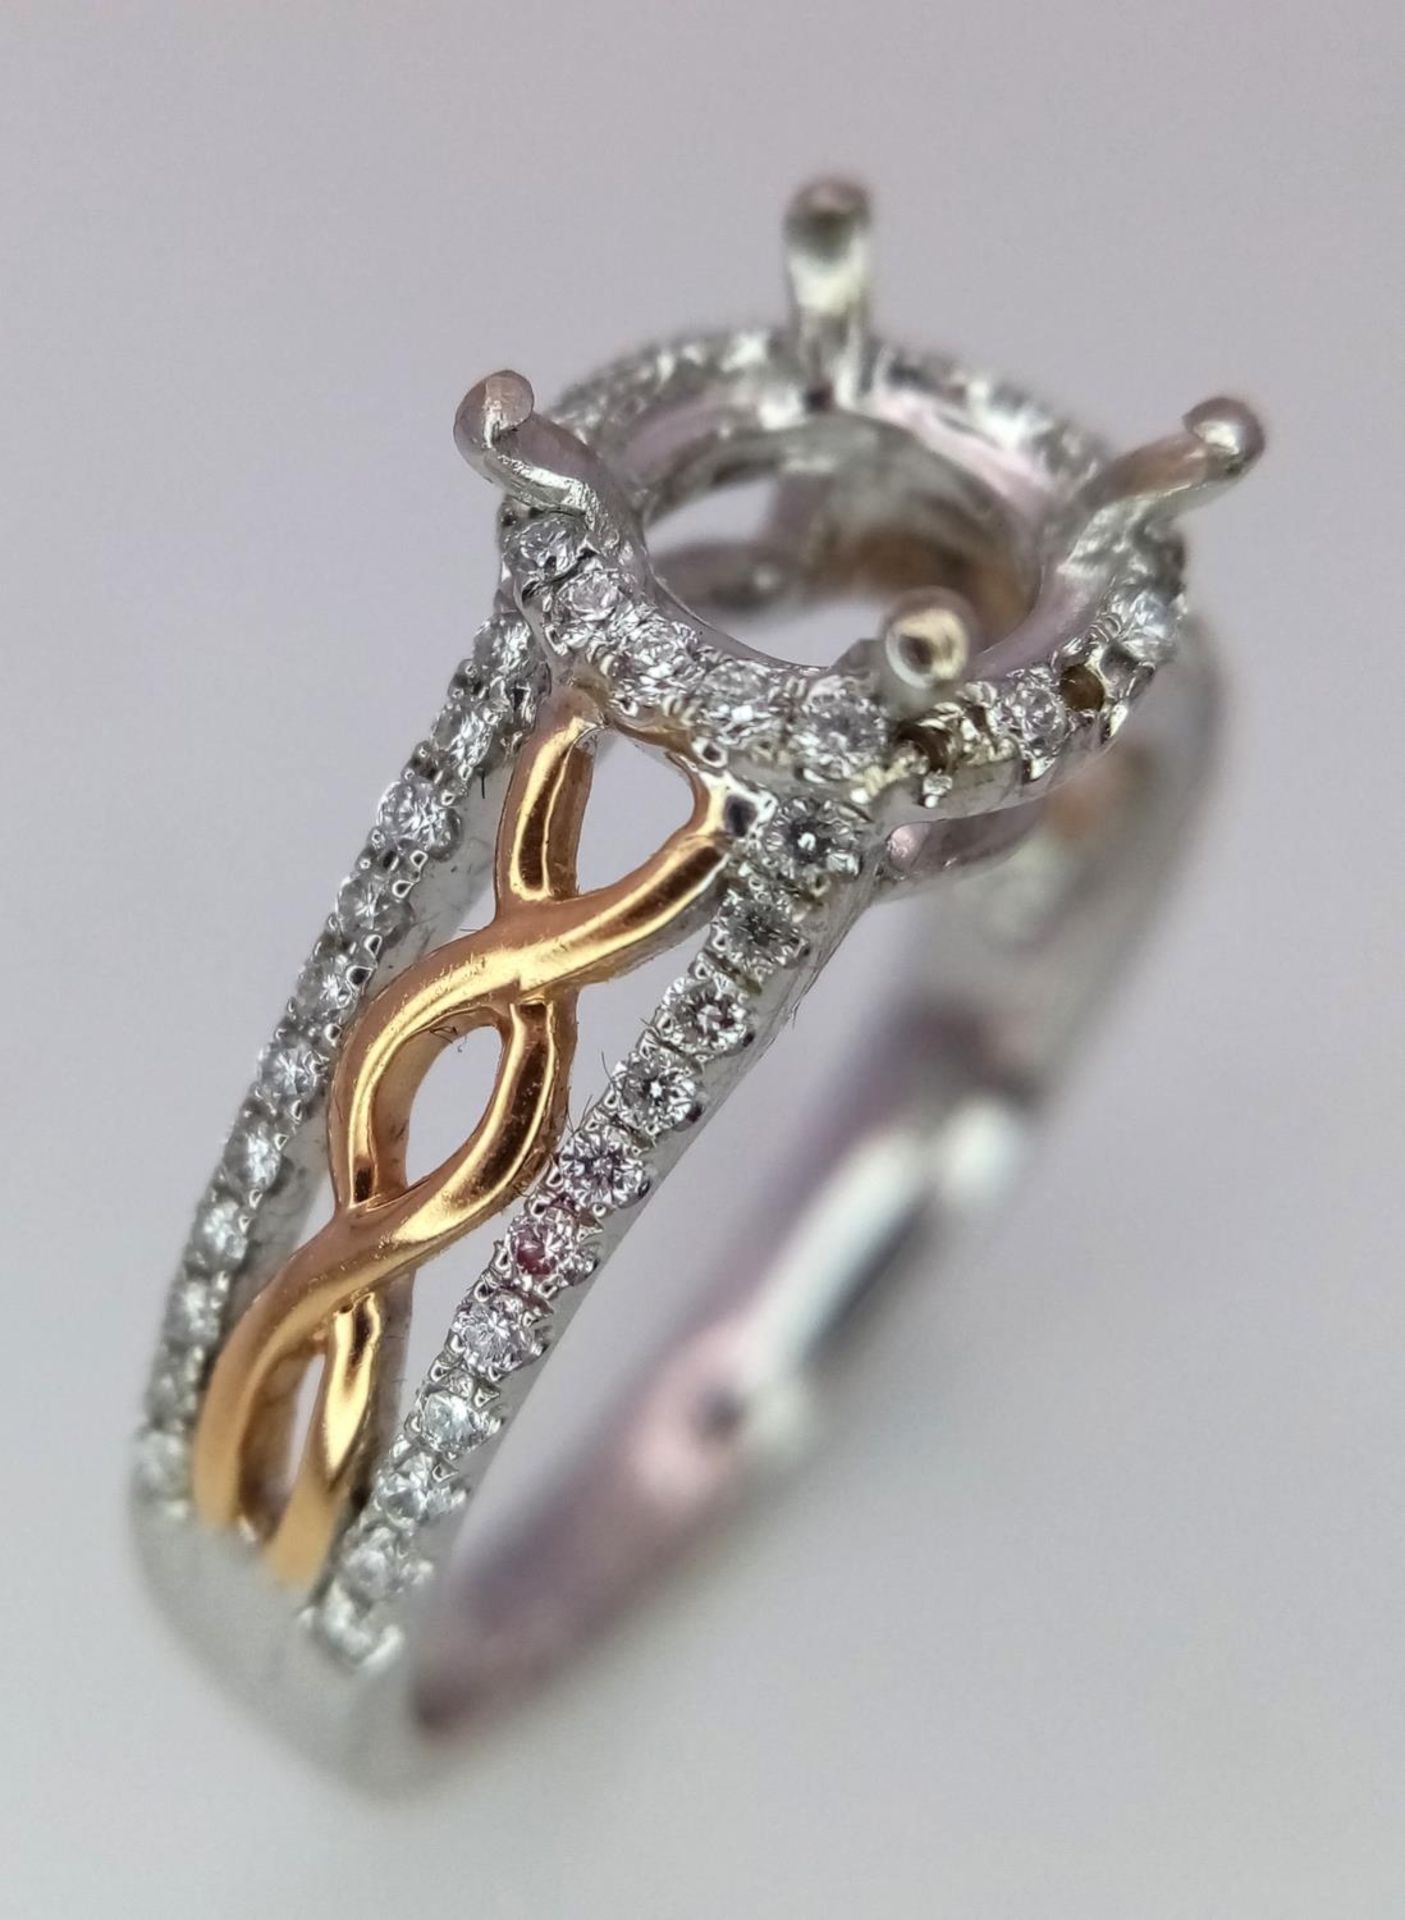 A 18K TWO GOLD TONE DIAMOND SET HALO RING WITH DIAMOND SPLIT SHOULDERS. 0.26CT DIAMONDS. READY TO - Image 3 of 8